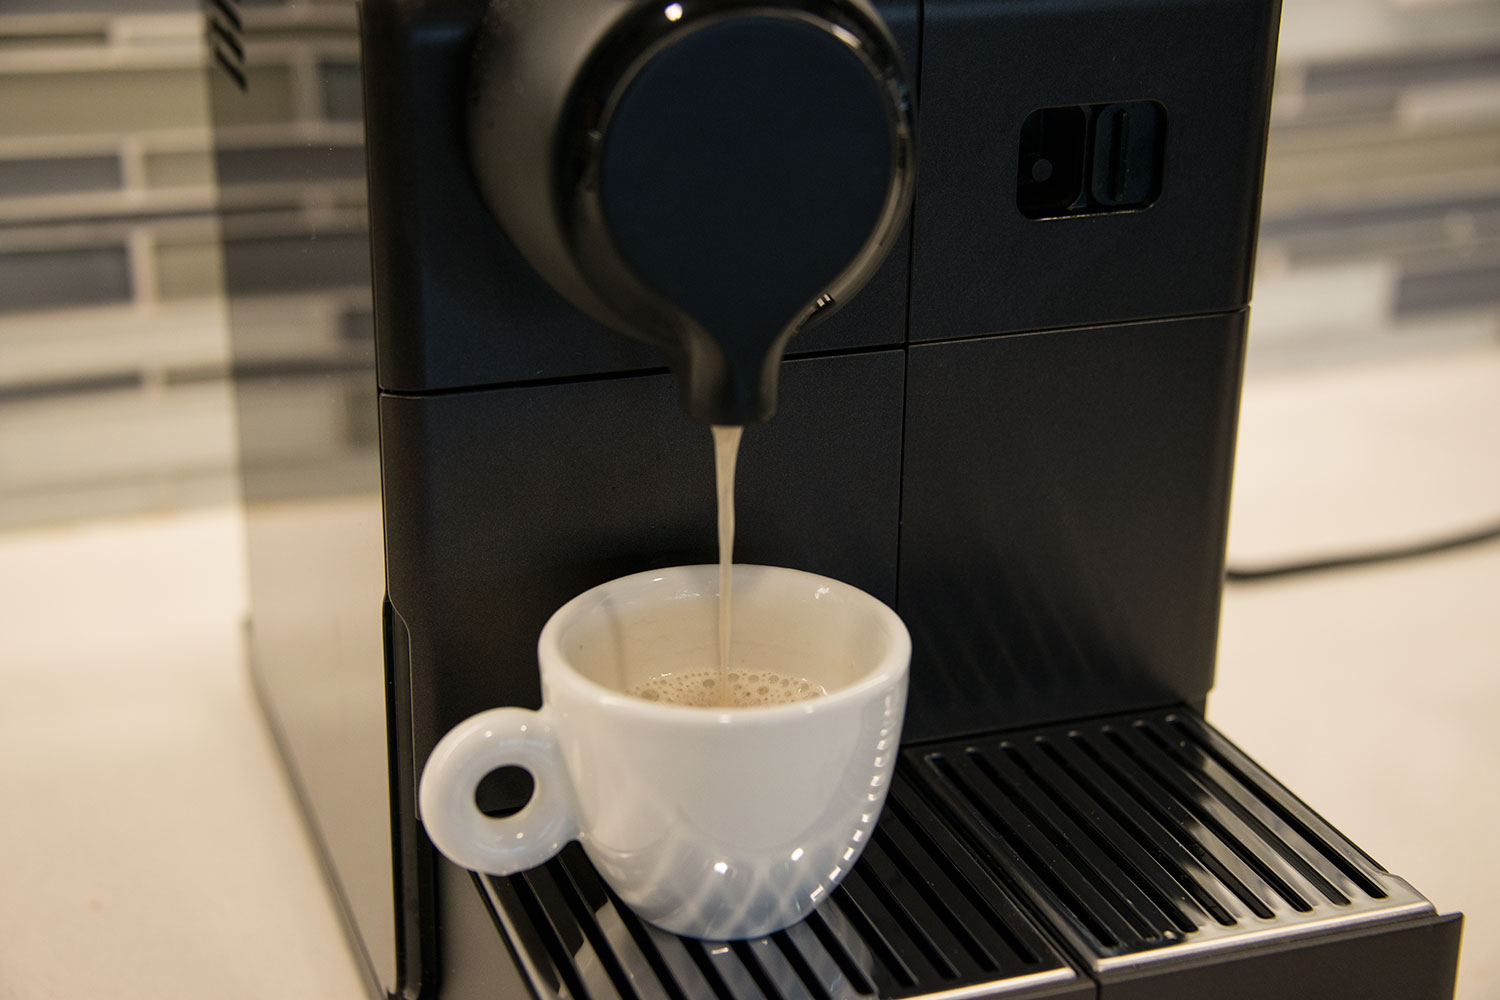 https://www.digitaltrends.com/wp-content/uploads/2015/10/DeLonghi-Nespresso-Lattissima-pouring.jpg?fit=1500%2C1000&p=1